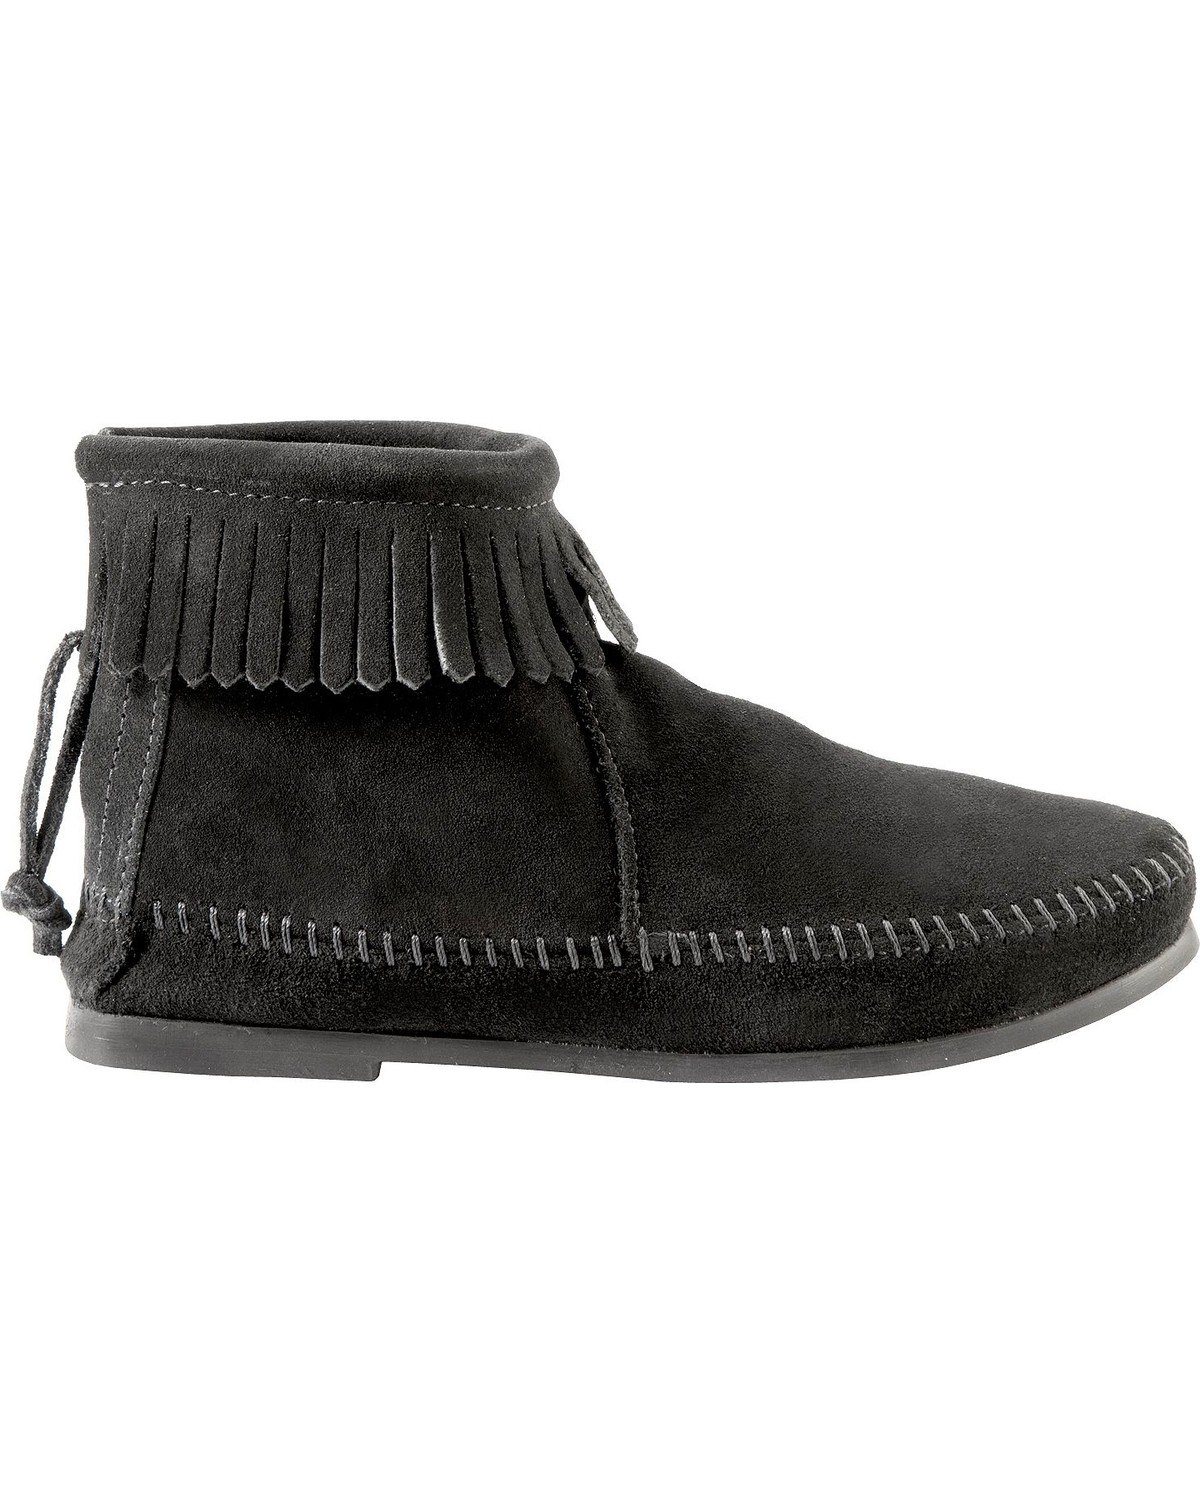 Women's Minnetonka Suede Back Zipper Moccasin Boots | Boot Barn